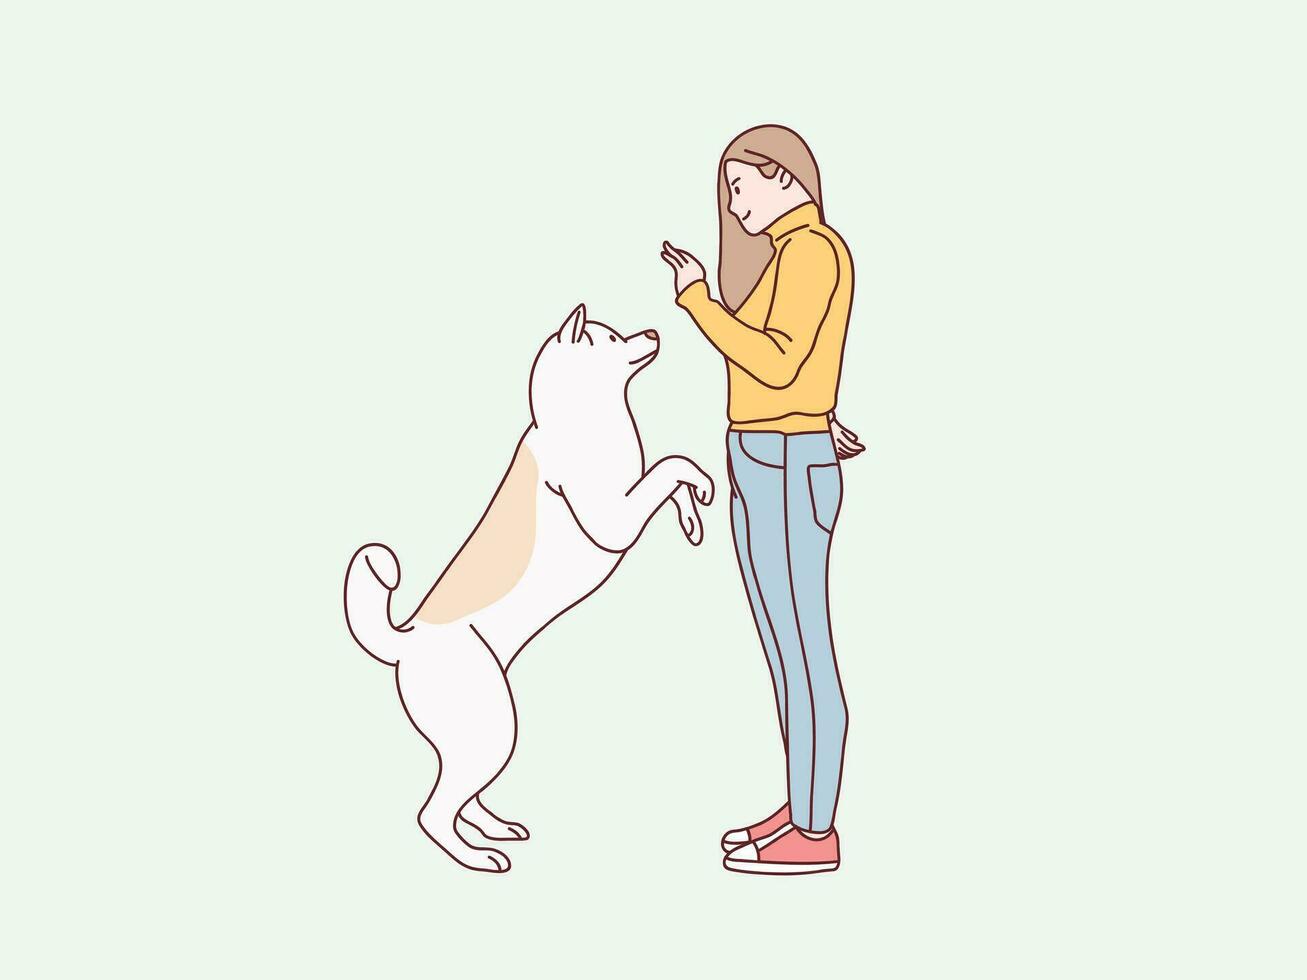 Woman stand training dog pet friendship simple korean style illustration vector